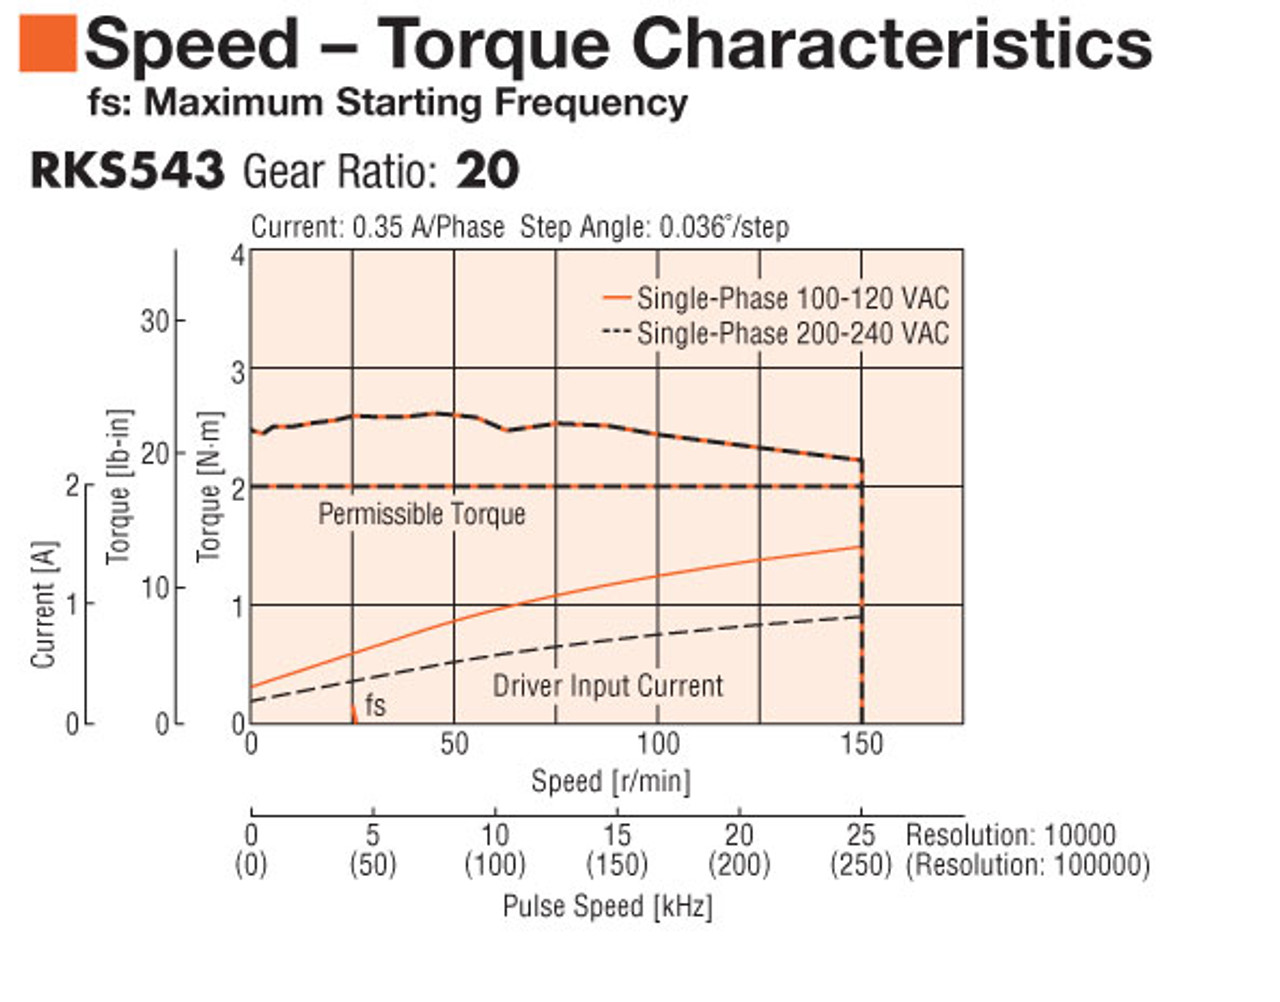 PKE543MC-TS20 - Speed-Torque